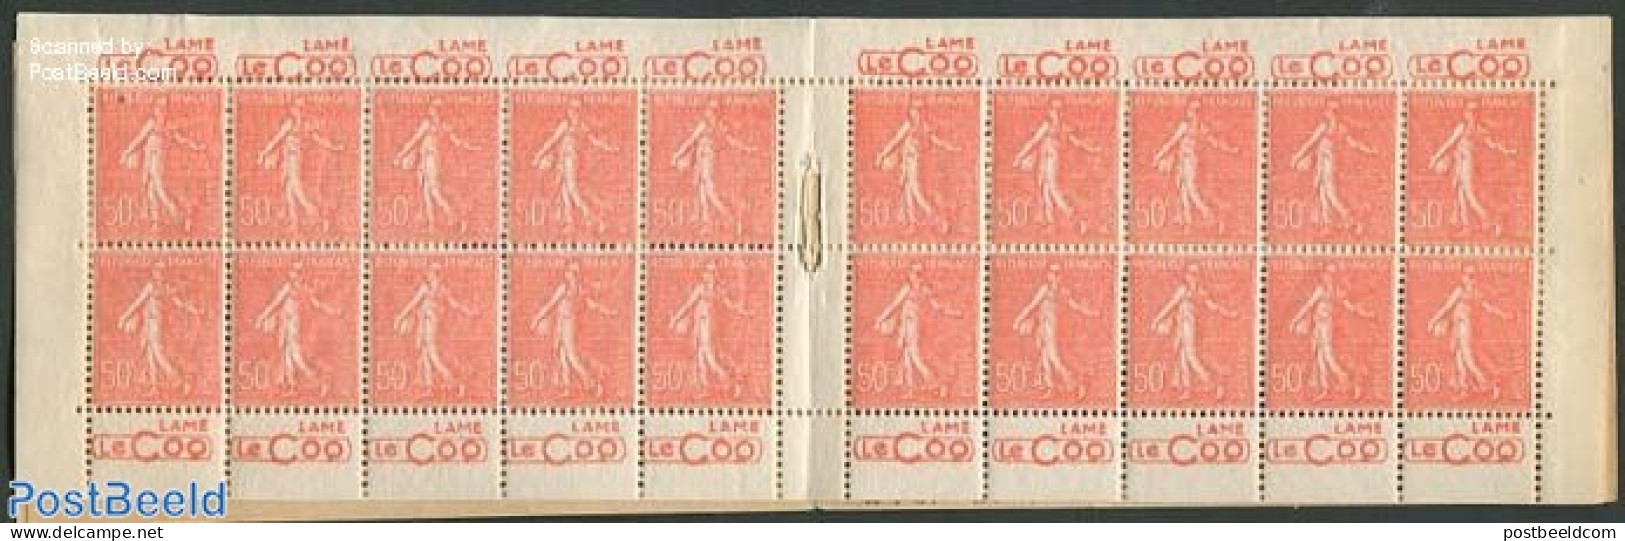 France 1924 20x50c Booklet (Lame Le Coq 4x), Mint NH, Stamp Booklets - Ungebraucht